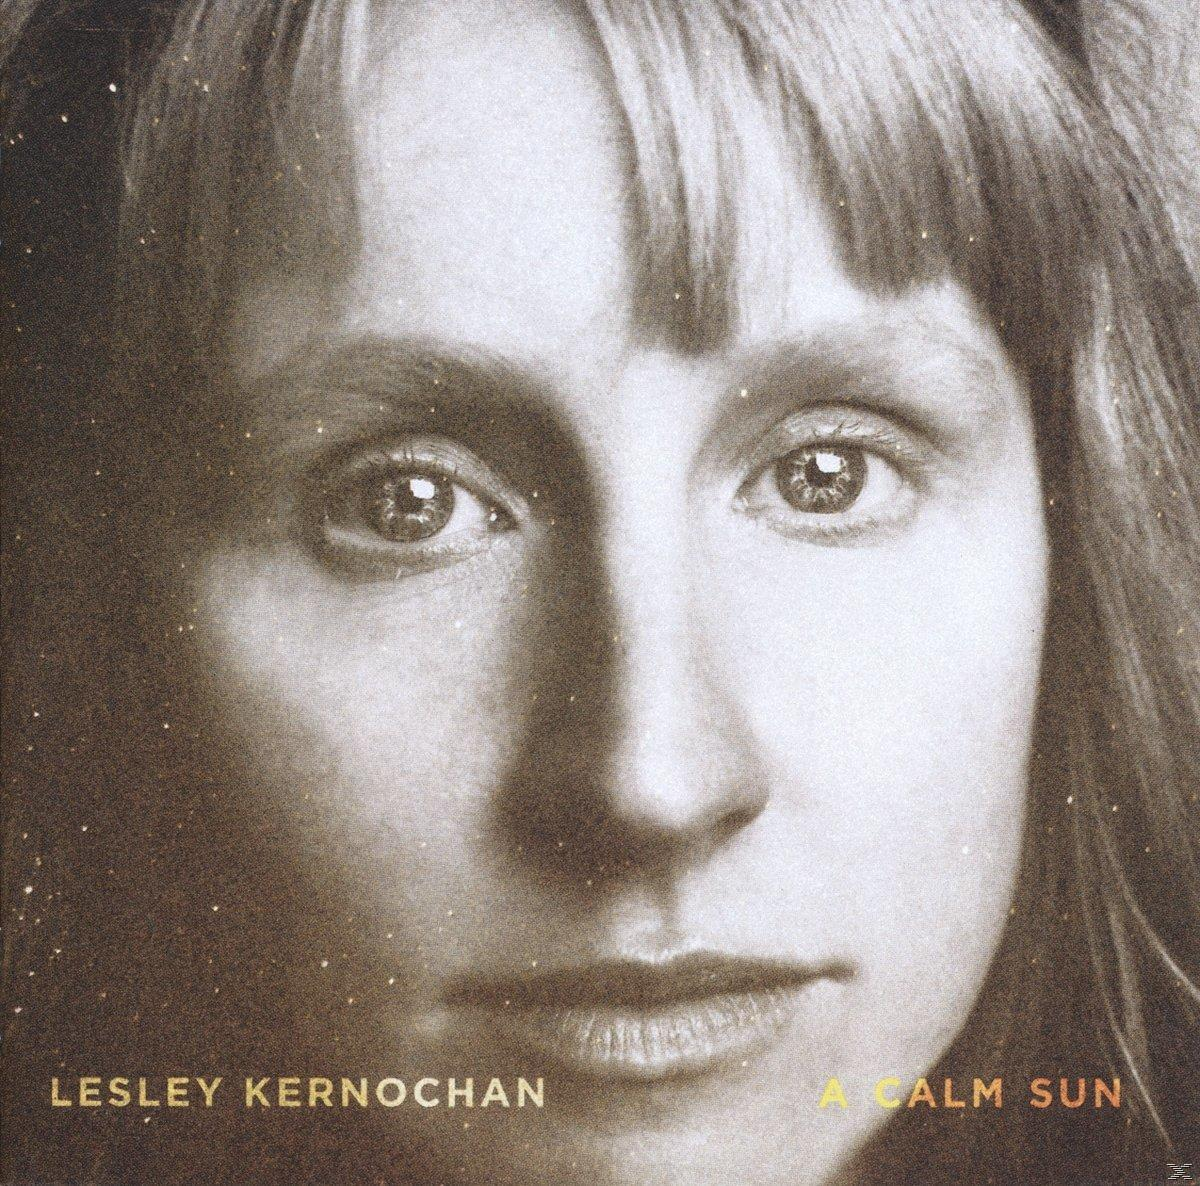 Lesley Kernochan (CD) Sun A Calm - 